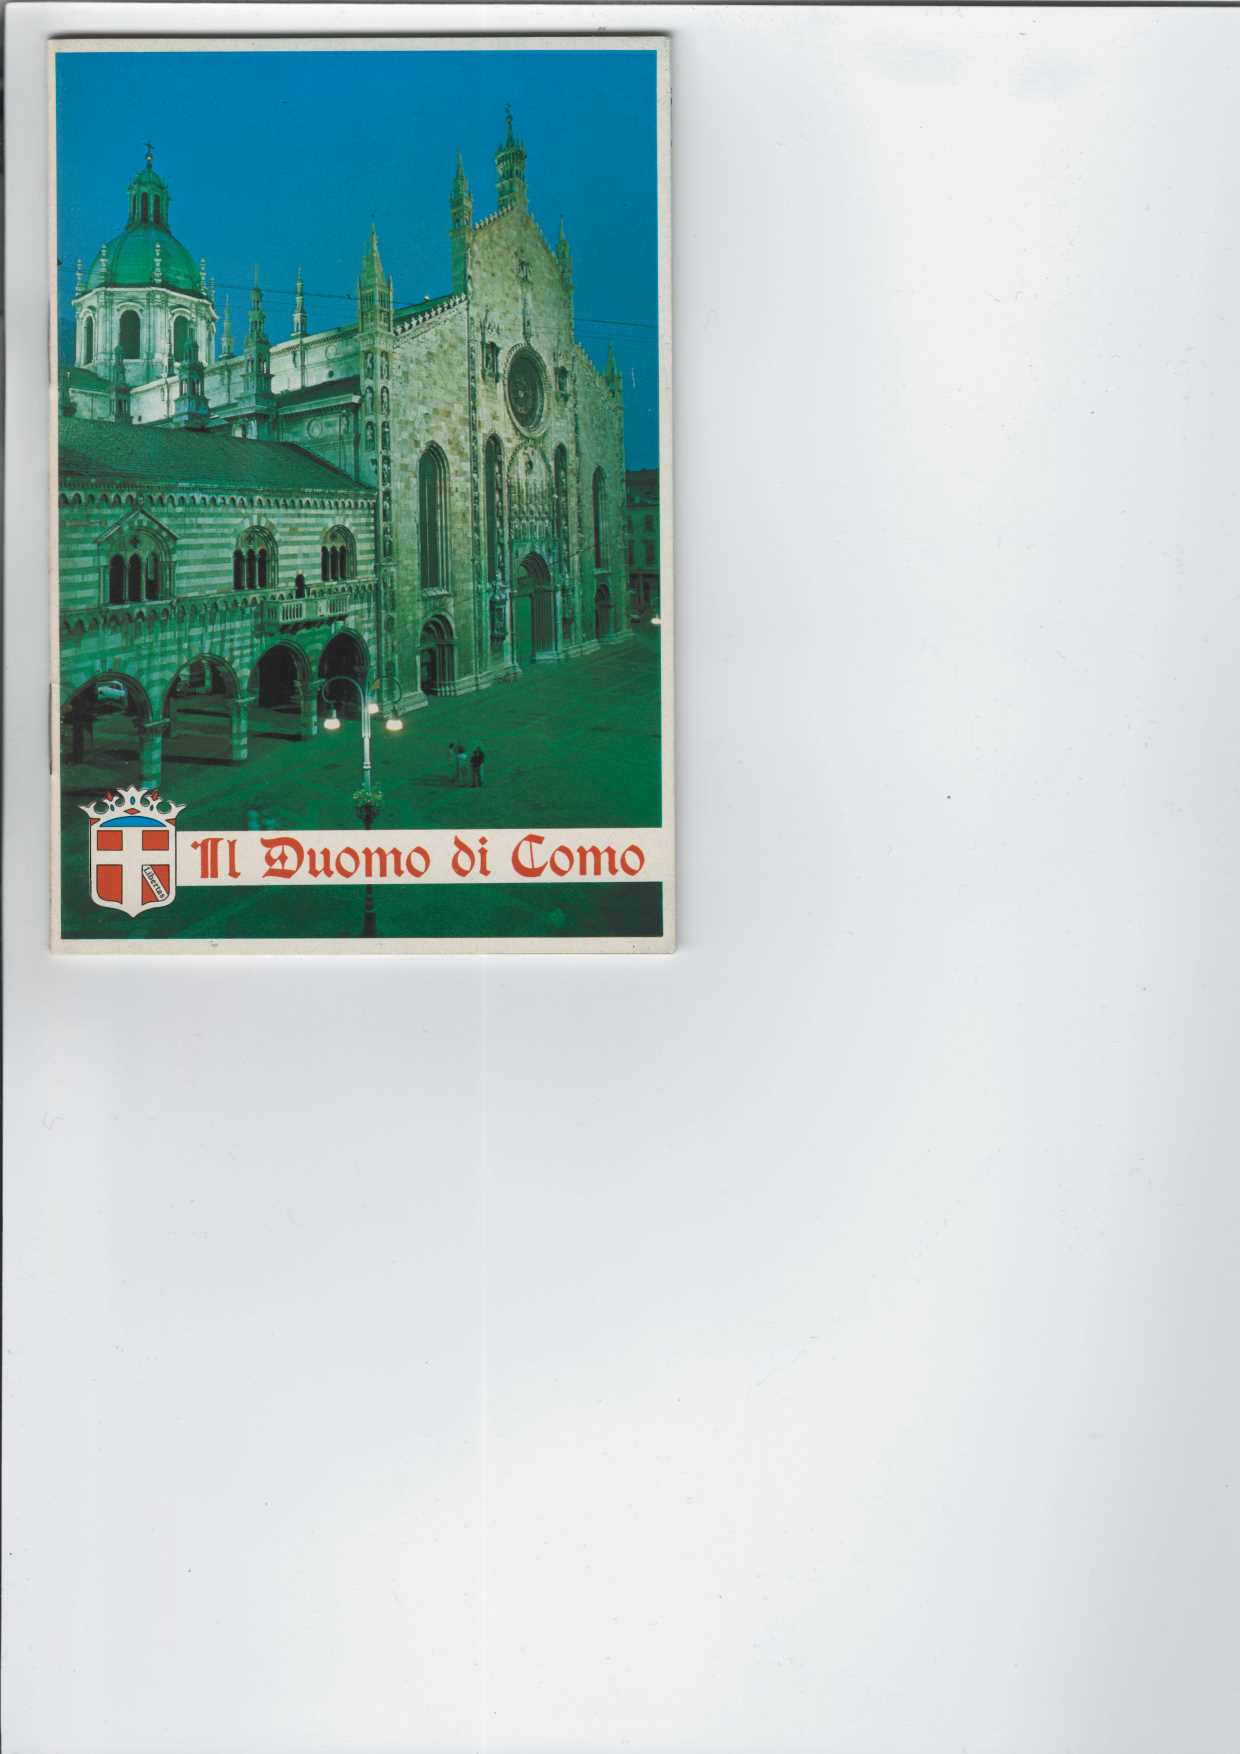 ll Duomo di Como. (Der Dom zu Como).